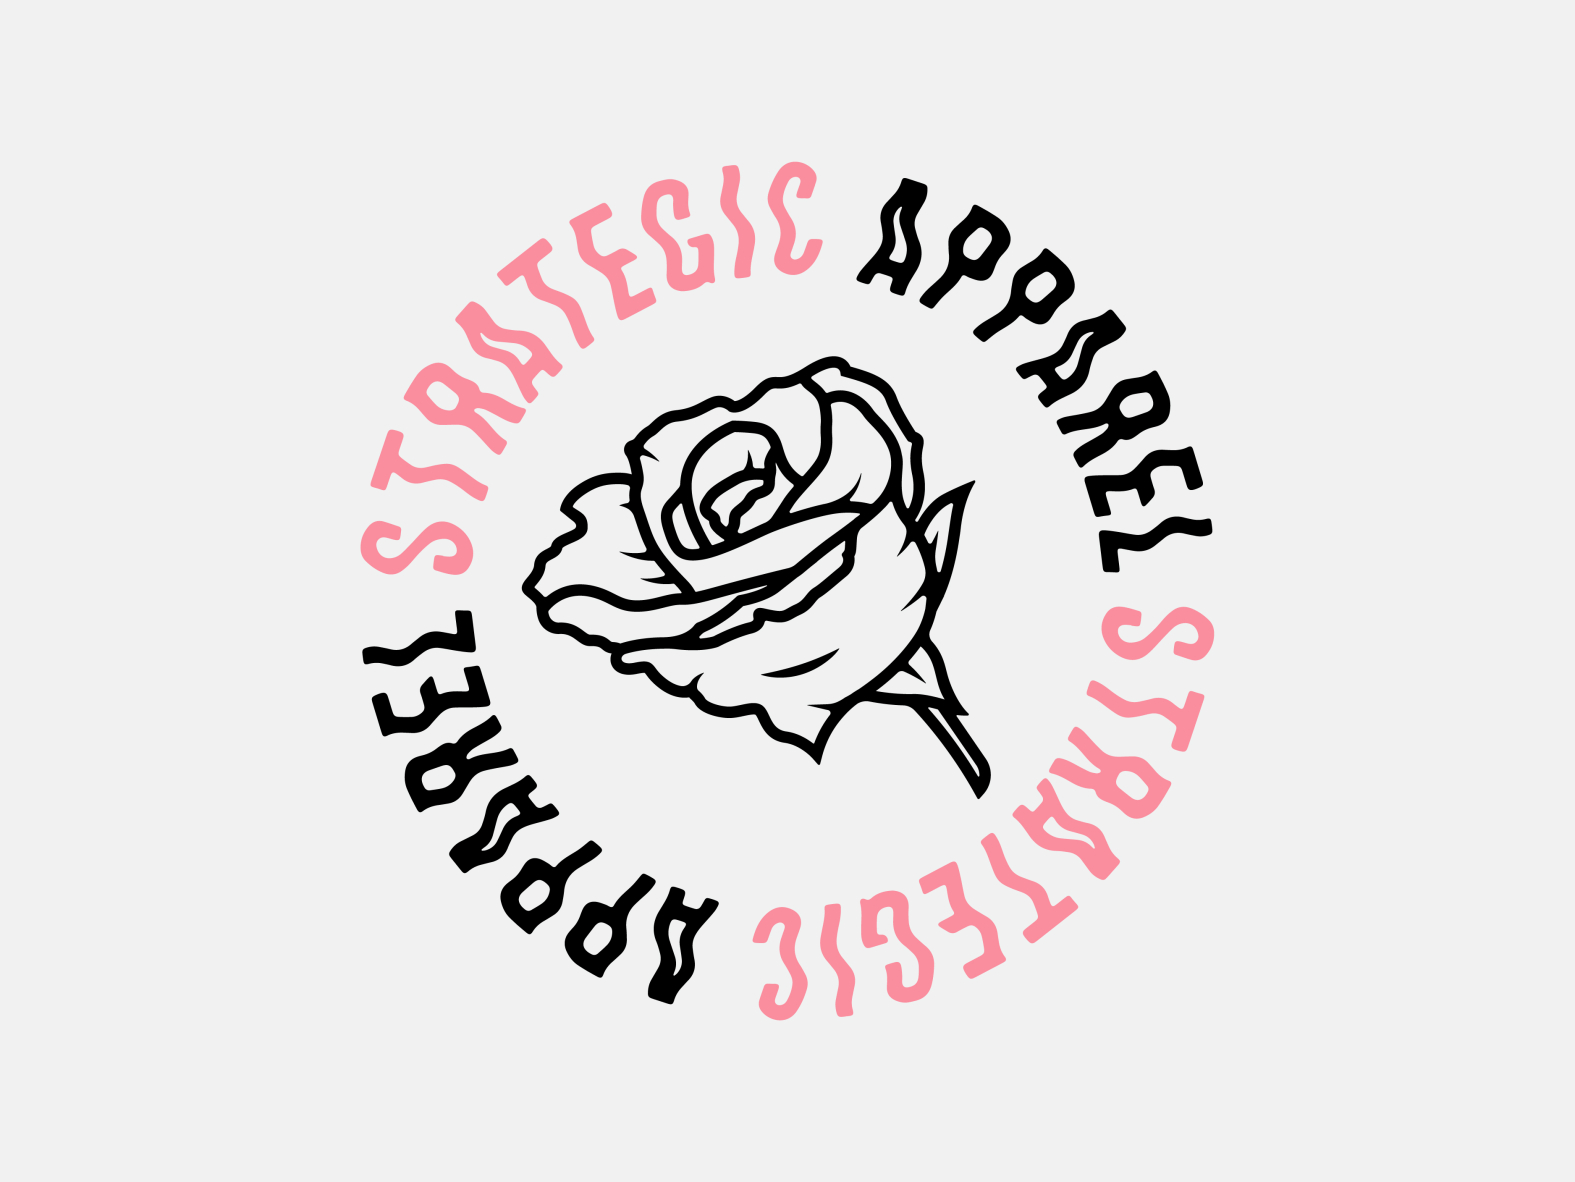 Strategic Apparel Rose Badge by Nick Stewart on Dribbble